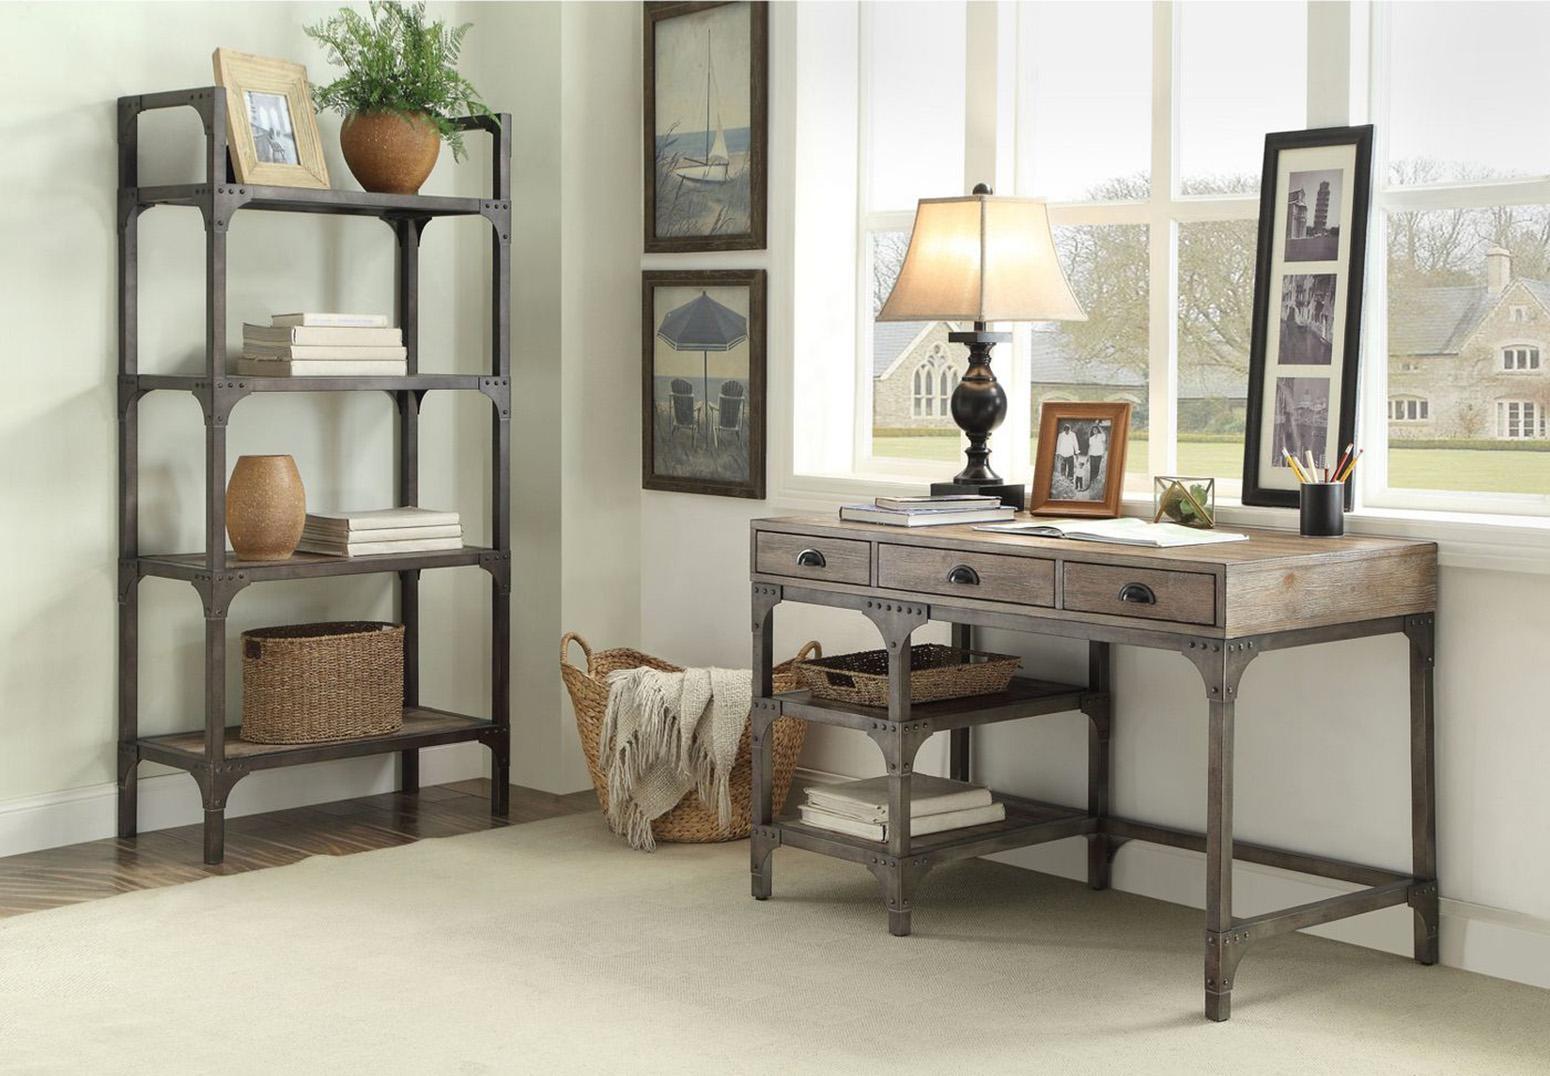 

    
Home Office Weathered Oak Desk + Bookshelf by Acme Gorden 92327-2pcs
